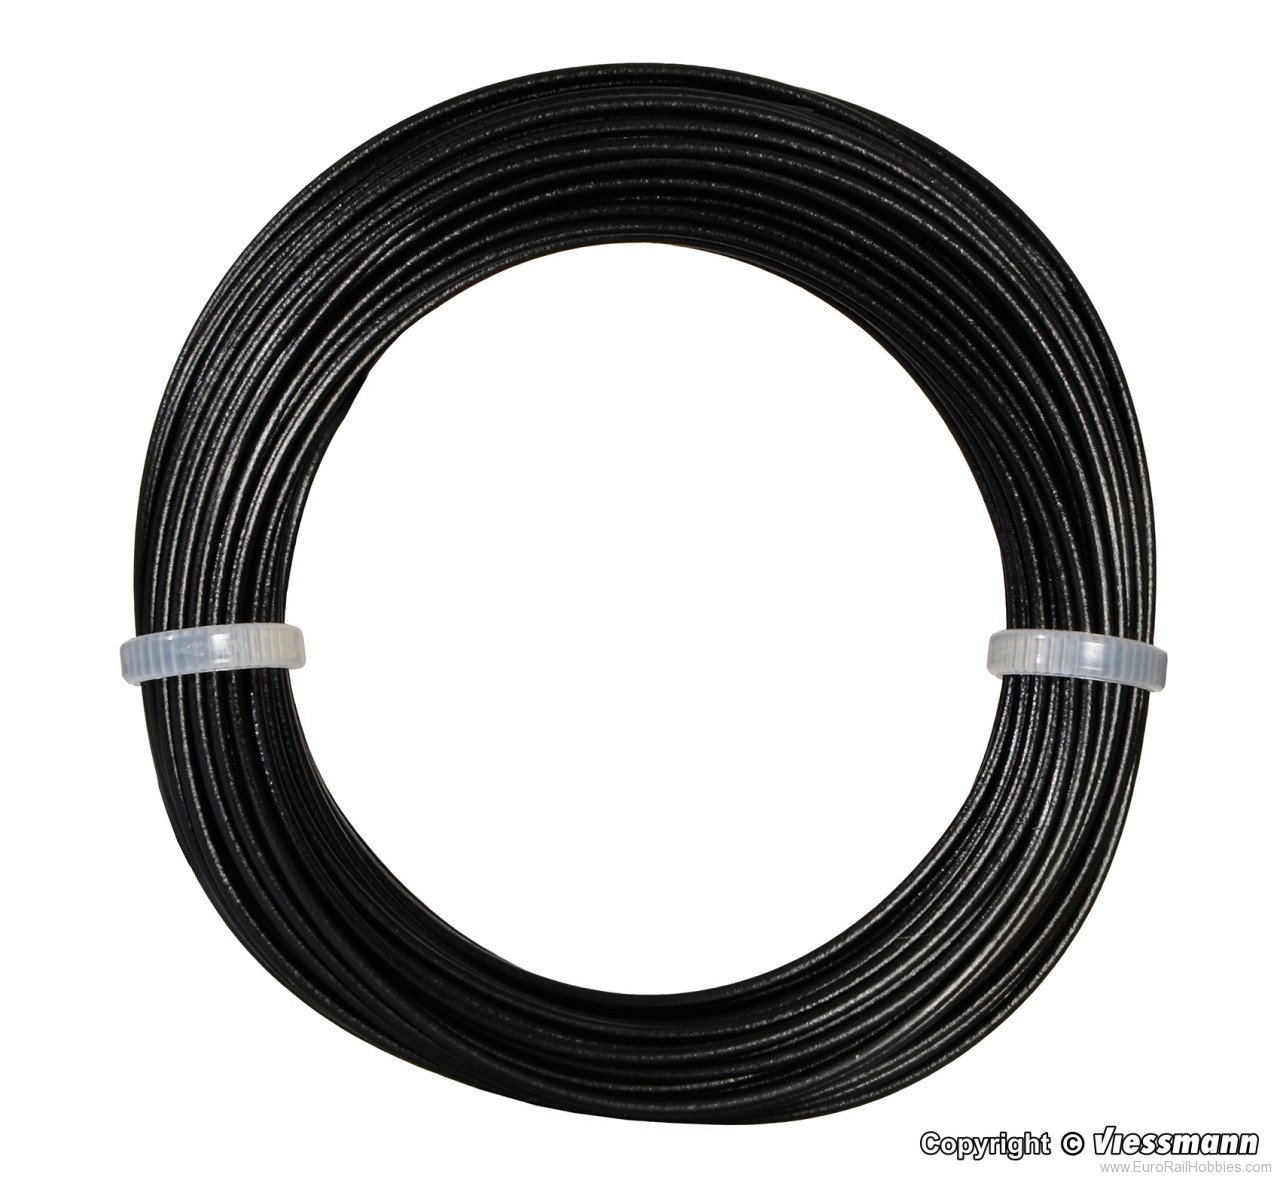 Viessmann 6860 Wire,0,14 mm dia., black, 10 m